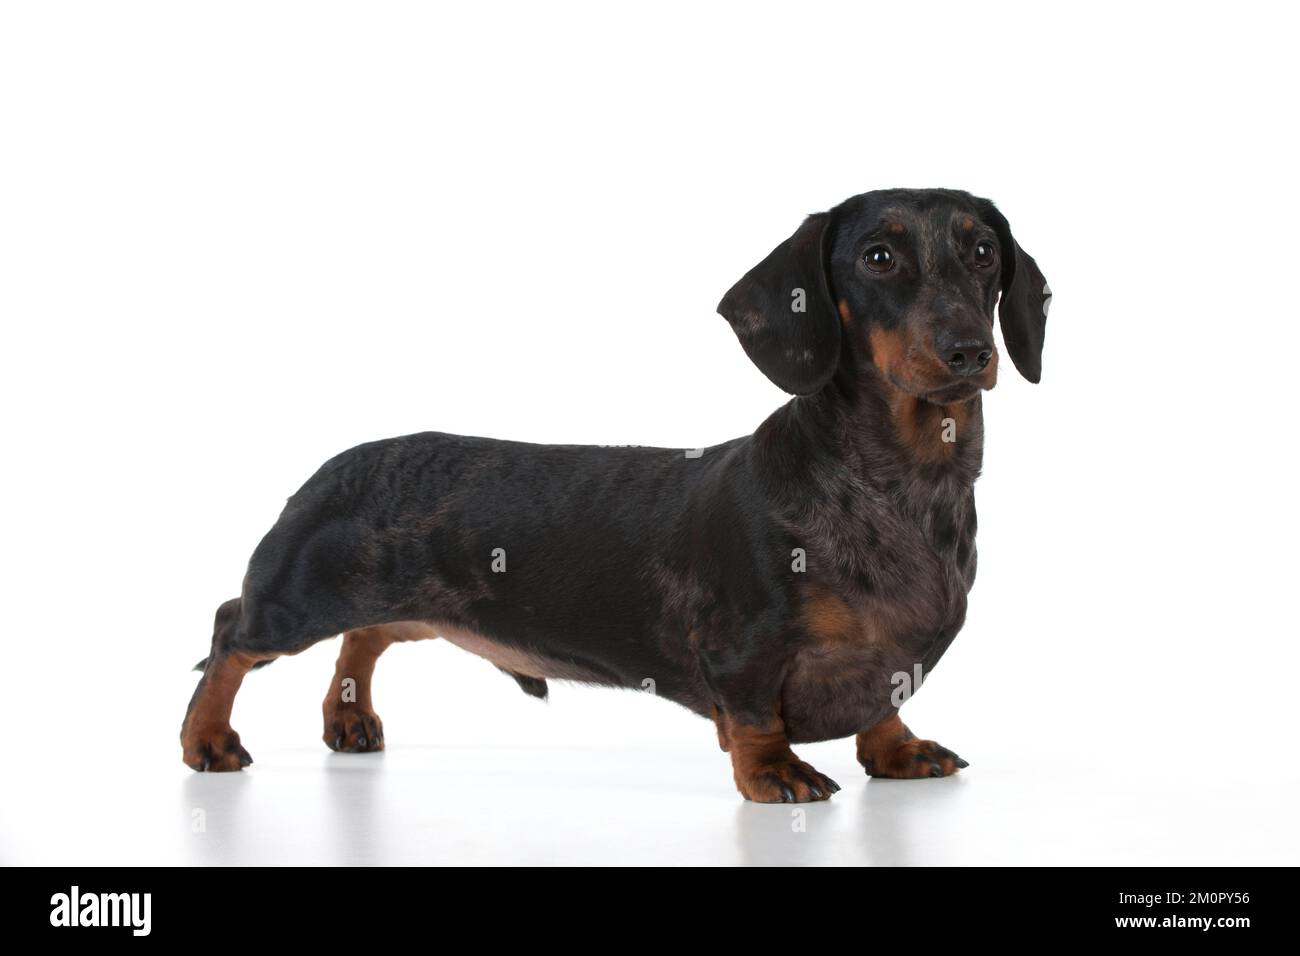 DOG - Short haired dachshund standing Stock Photo